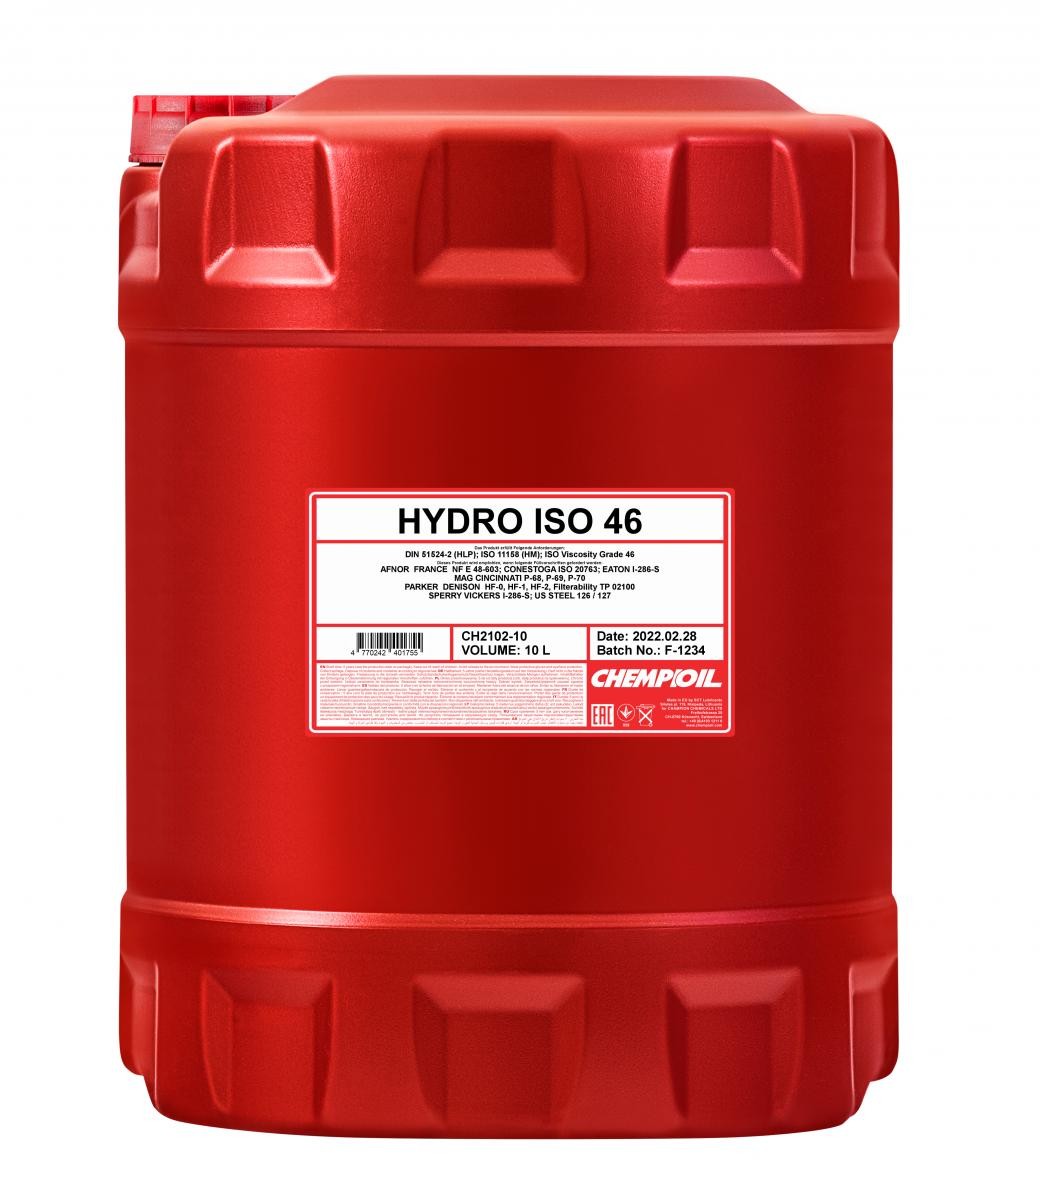 LKW Hydrauliköl CHEMPIOIL CH2102-10 kaufen